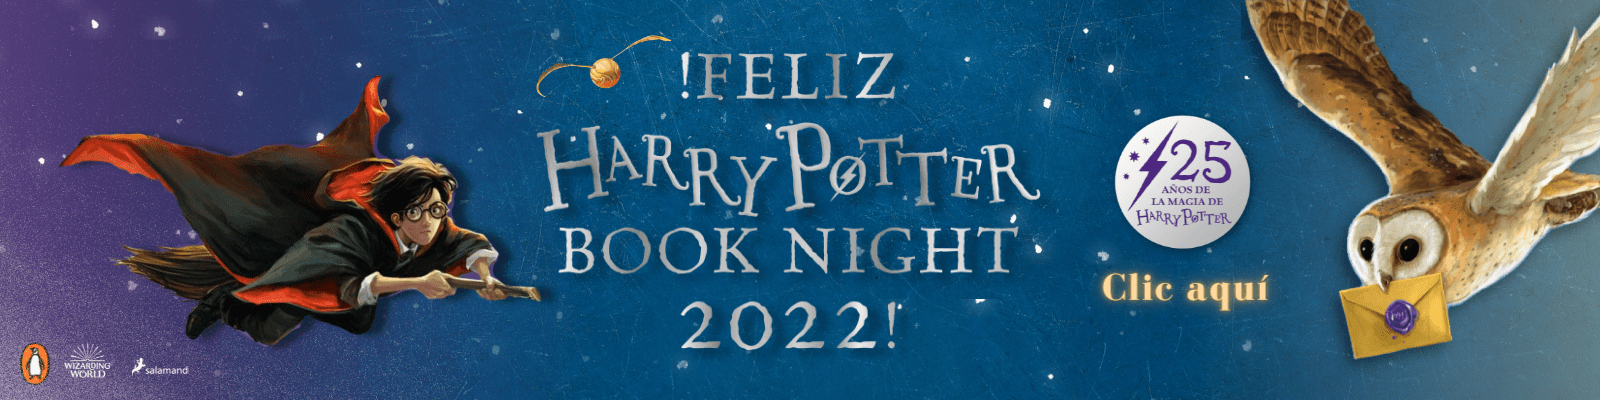 Feliz Harry Potter Book Night 2022 - Desktop PANAMERICANA